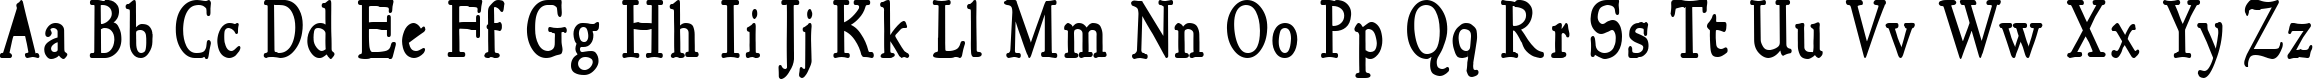 Пример написания английского алфавита шрифтом NewStyleCondensed Bold